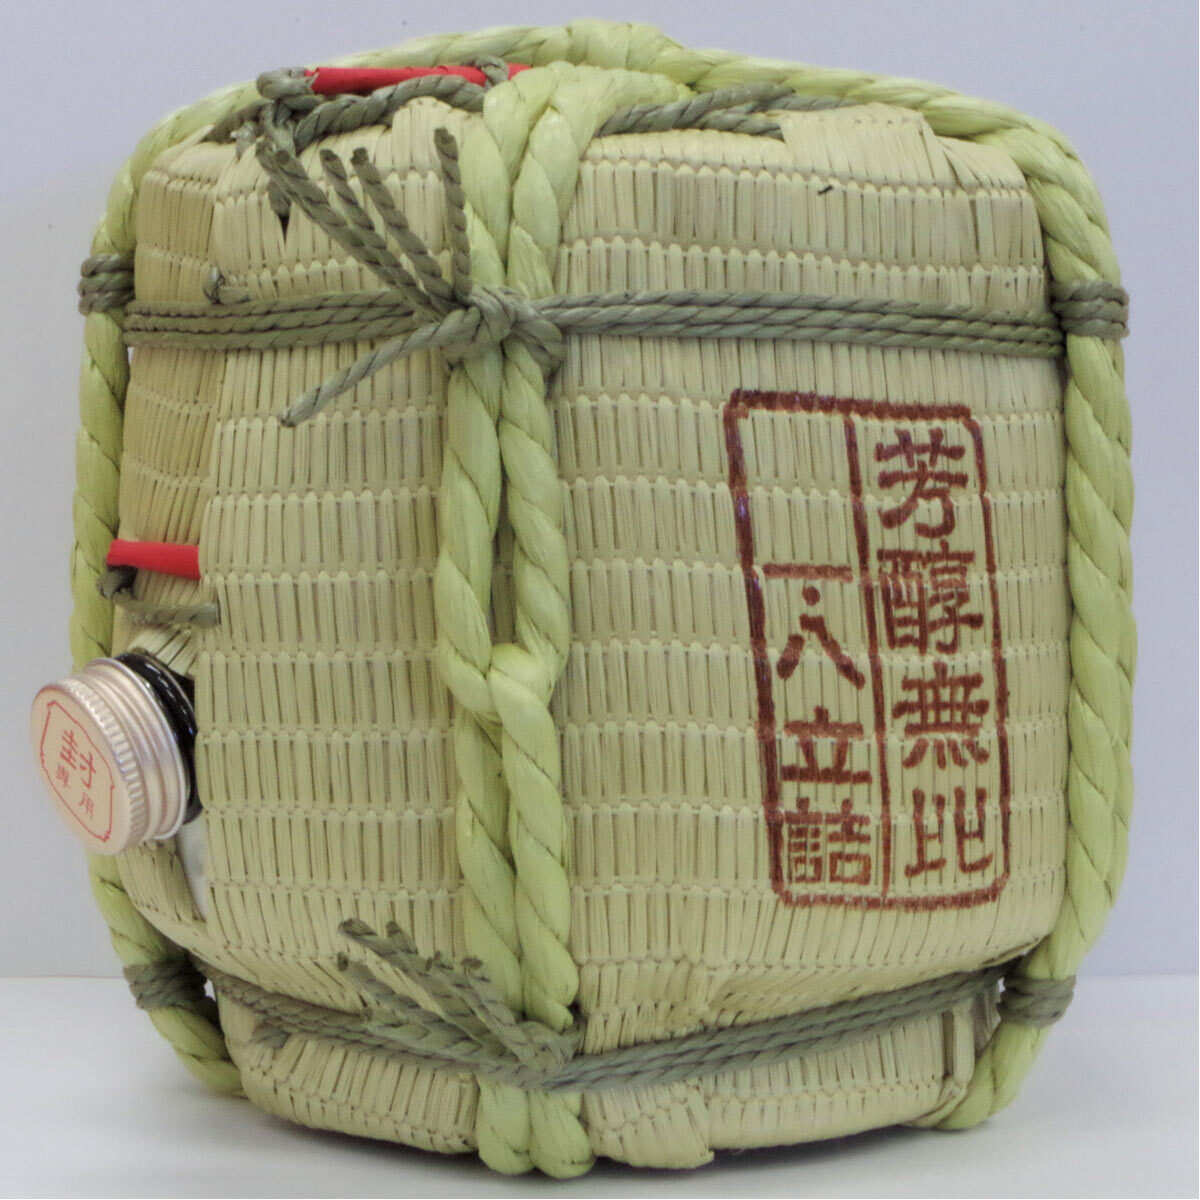 Image of a barrel of sake with metal cap